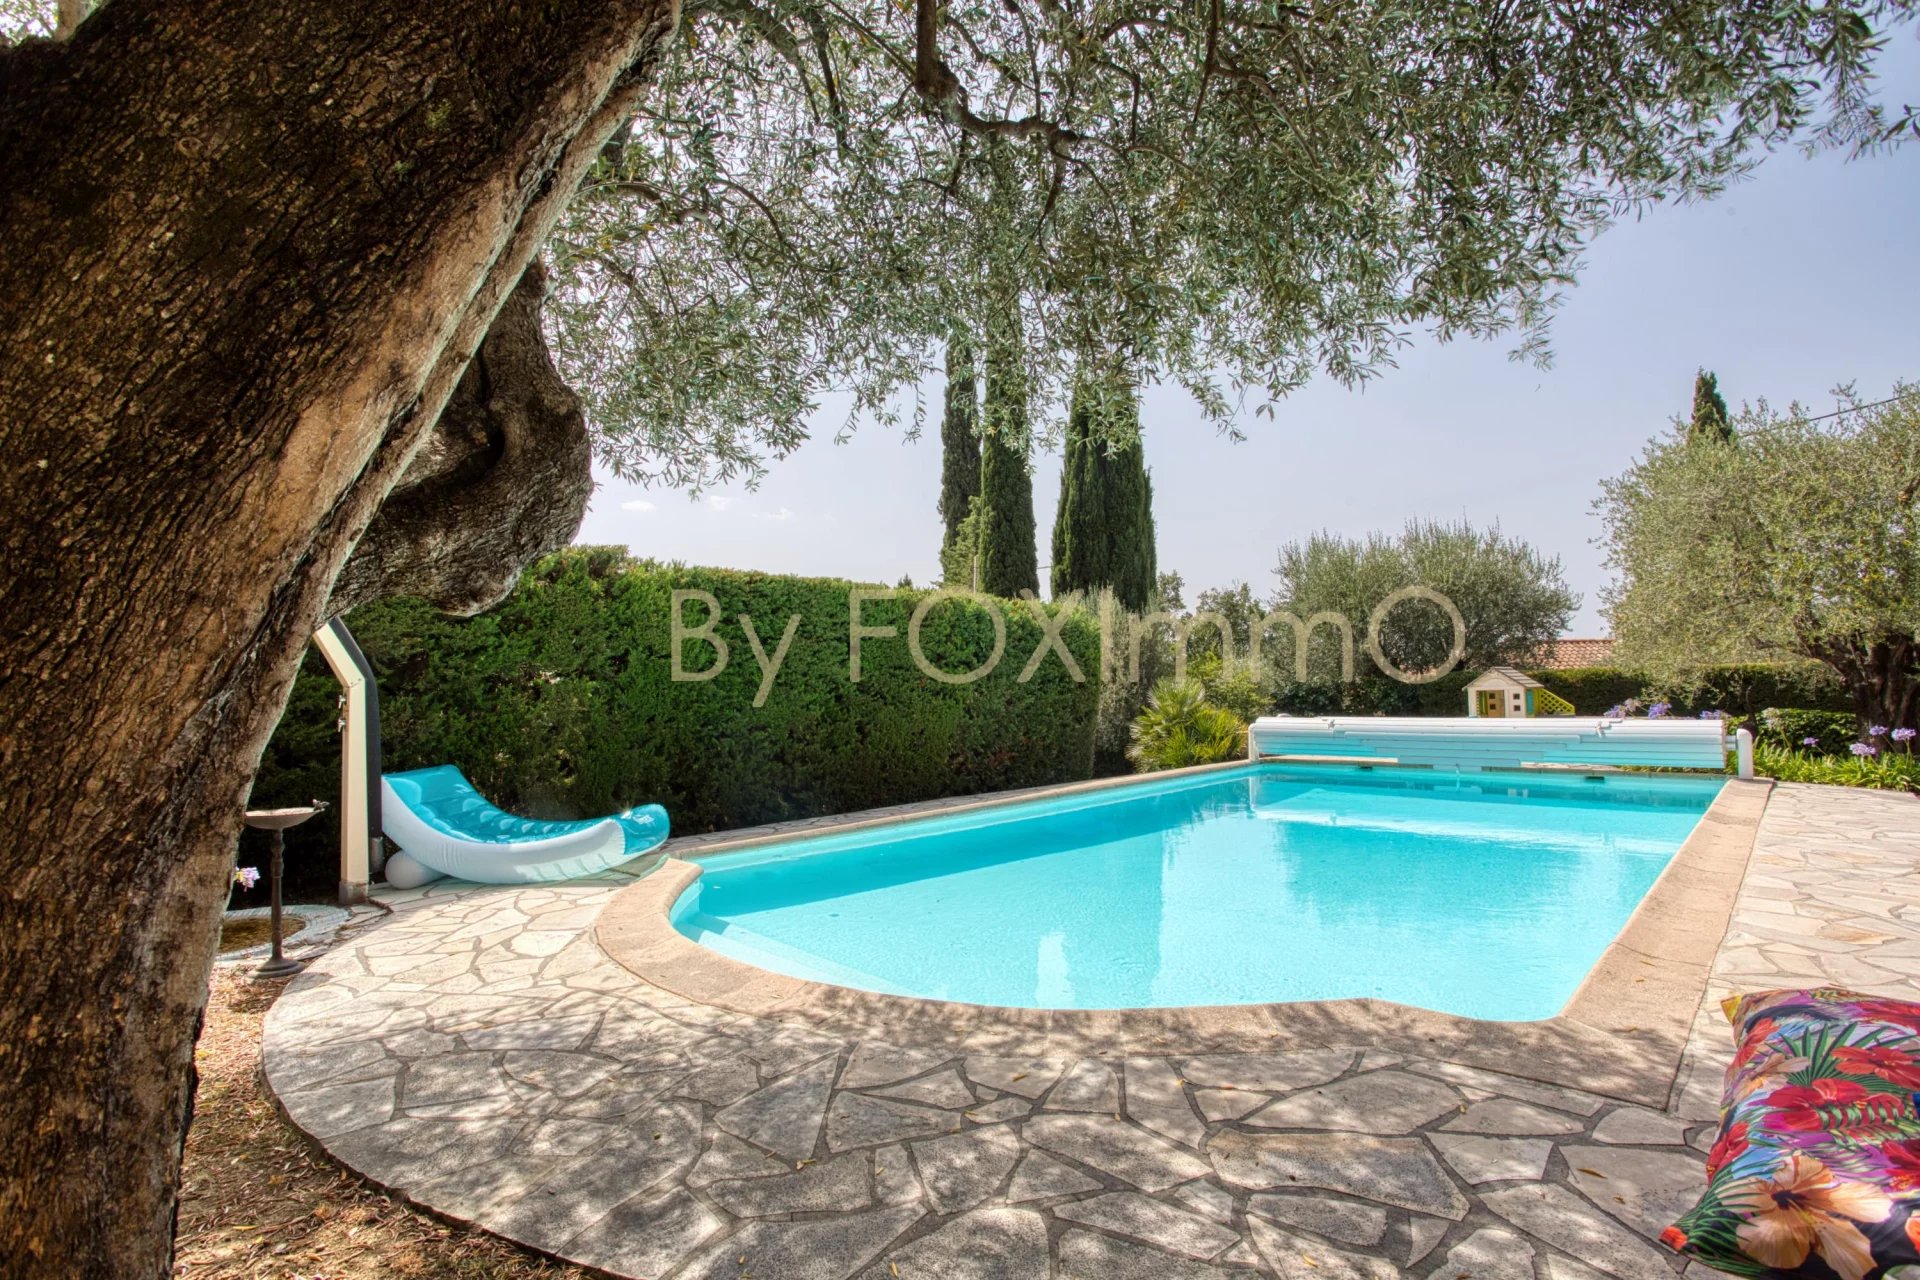 Côte d'Azur villa indipendente, zona tranquilla, piscina, Appartamento indipendente